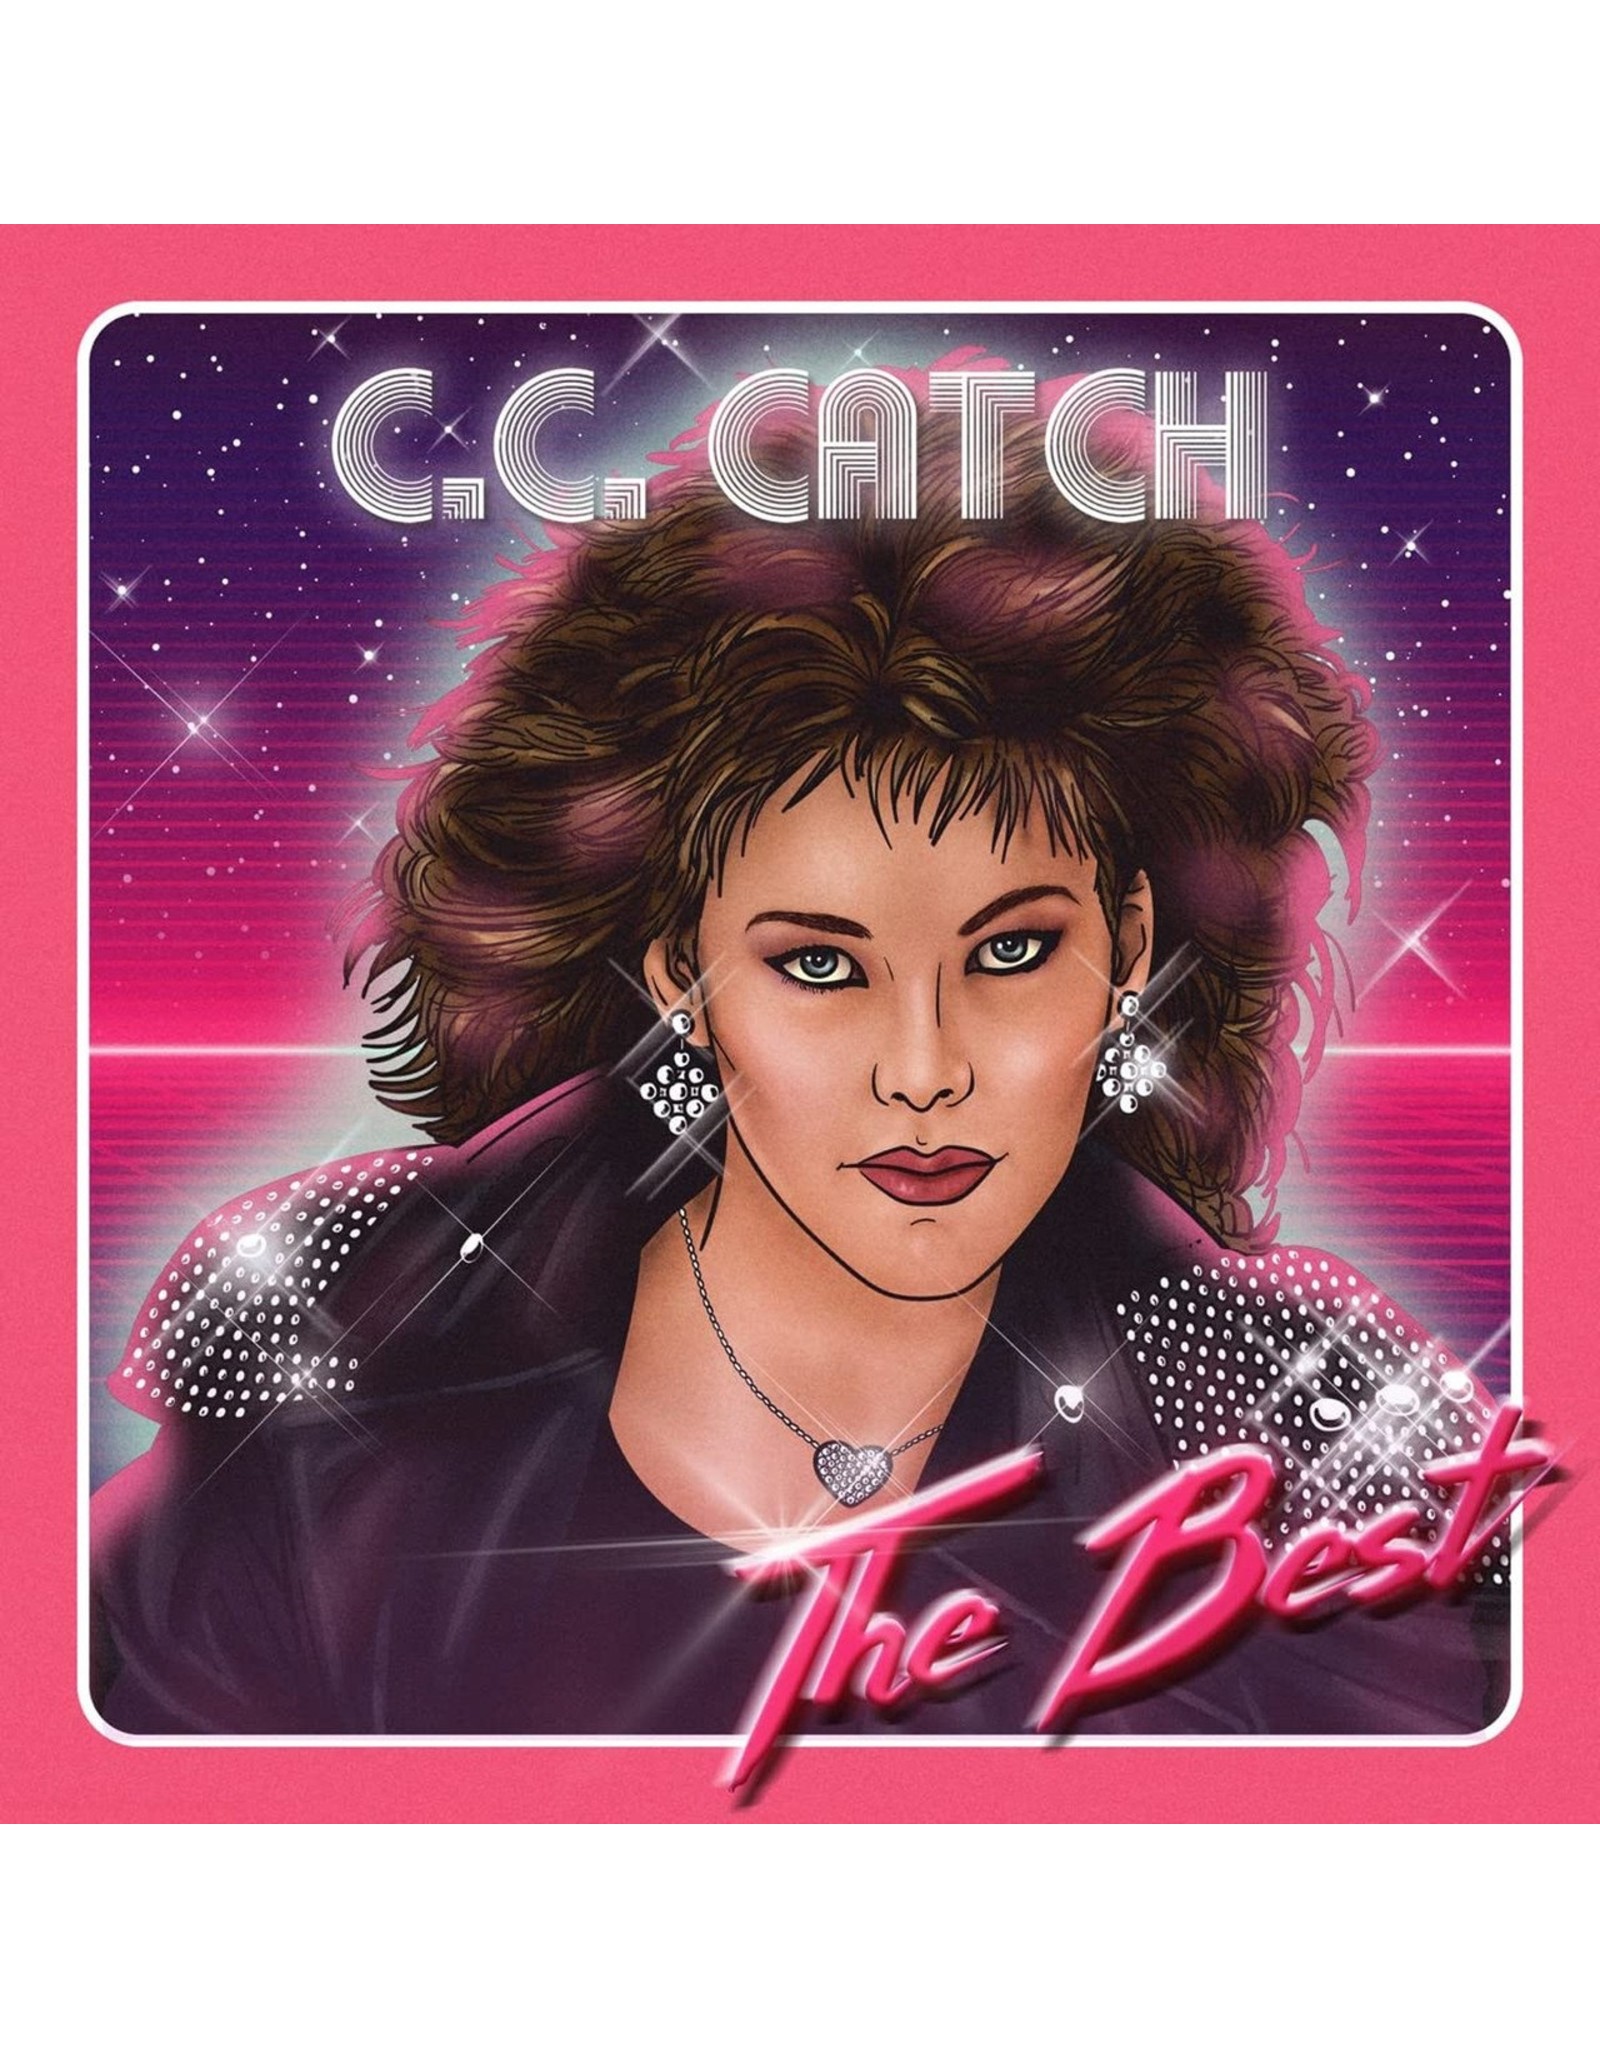 C.C. Catch - The Best (Pink Vinyl)